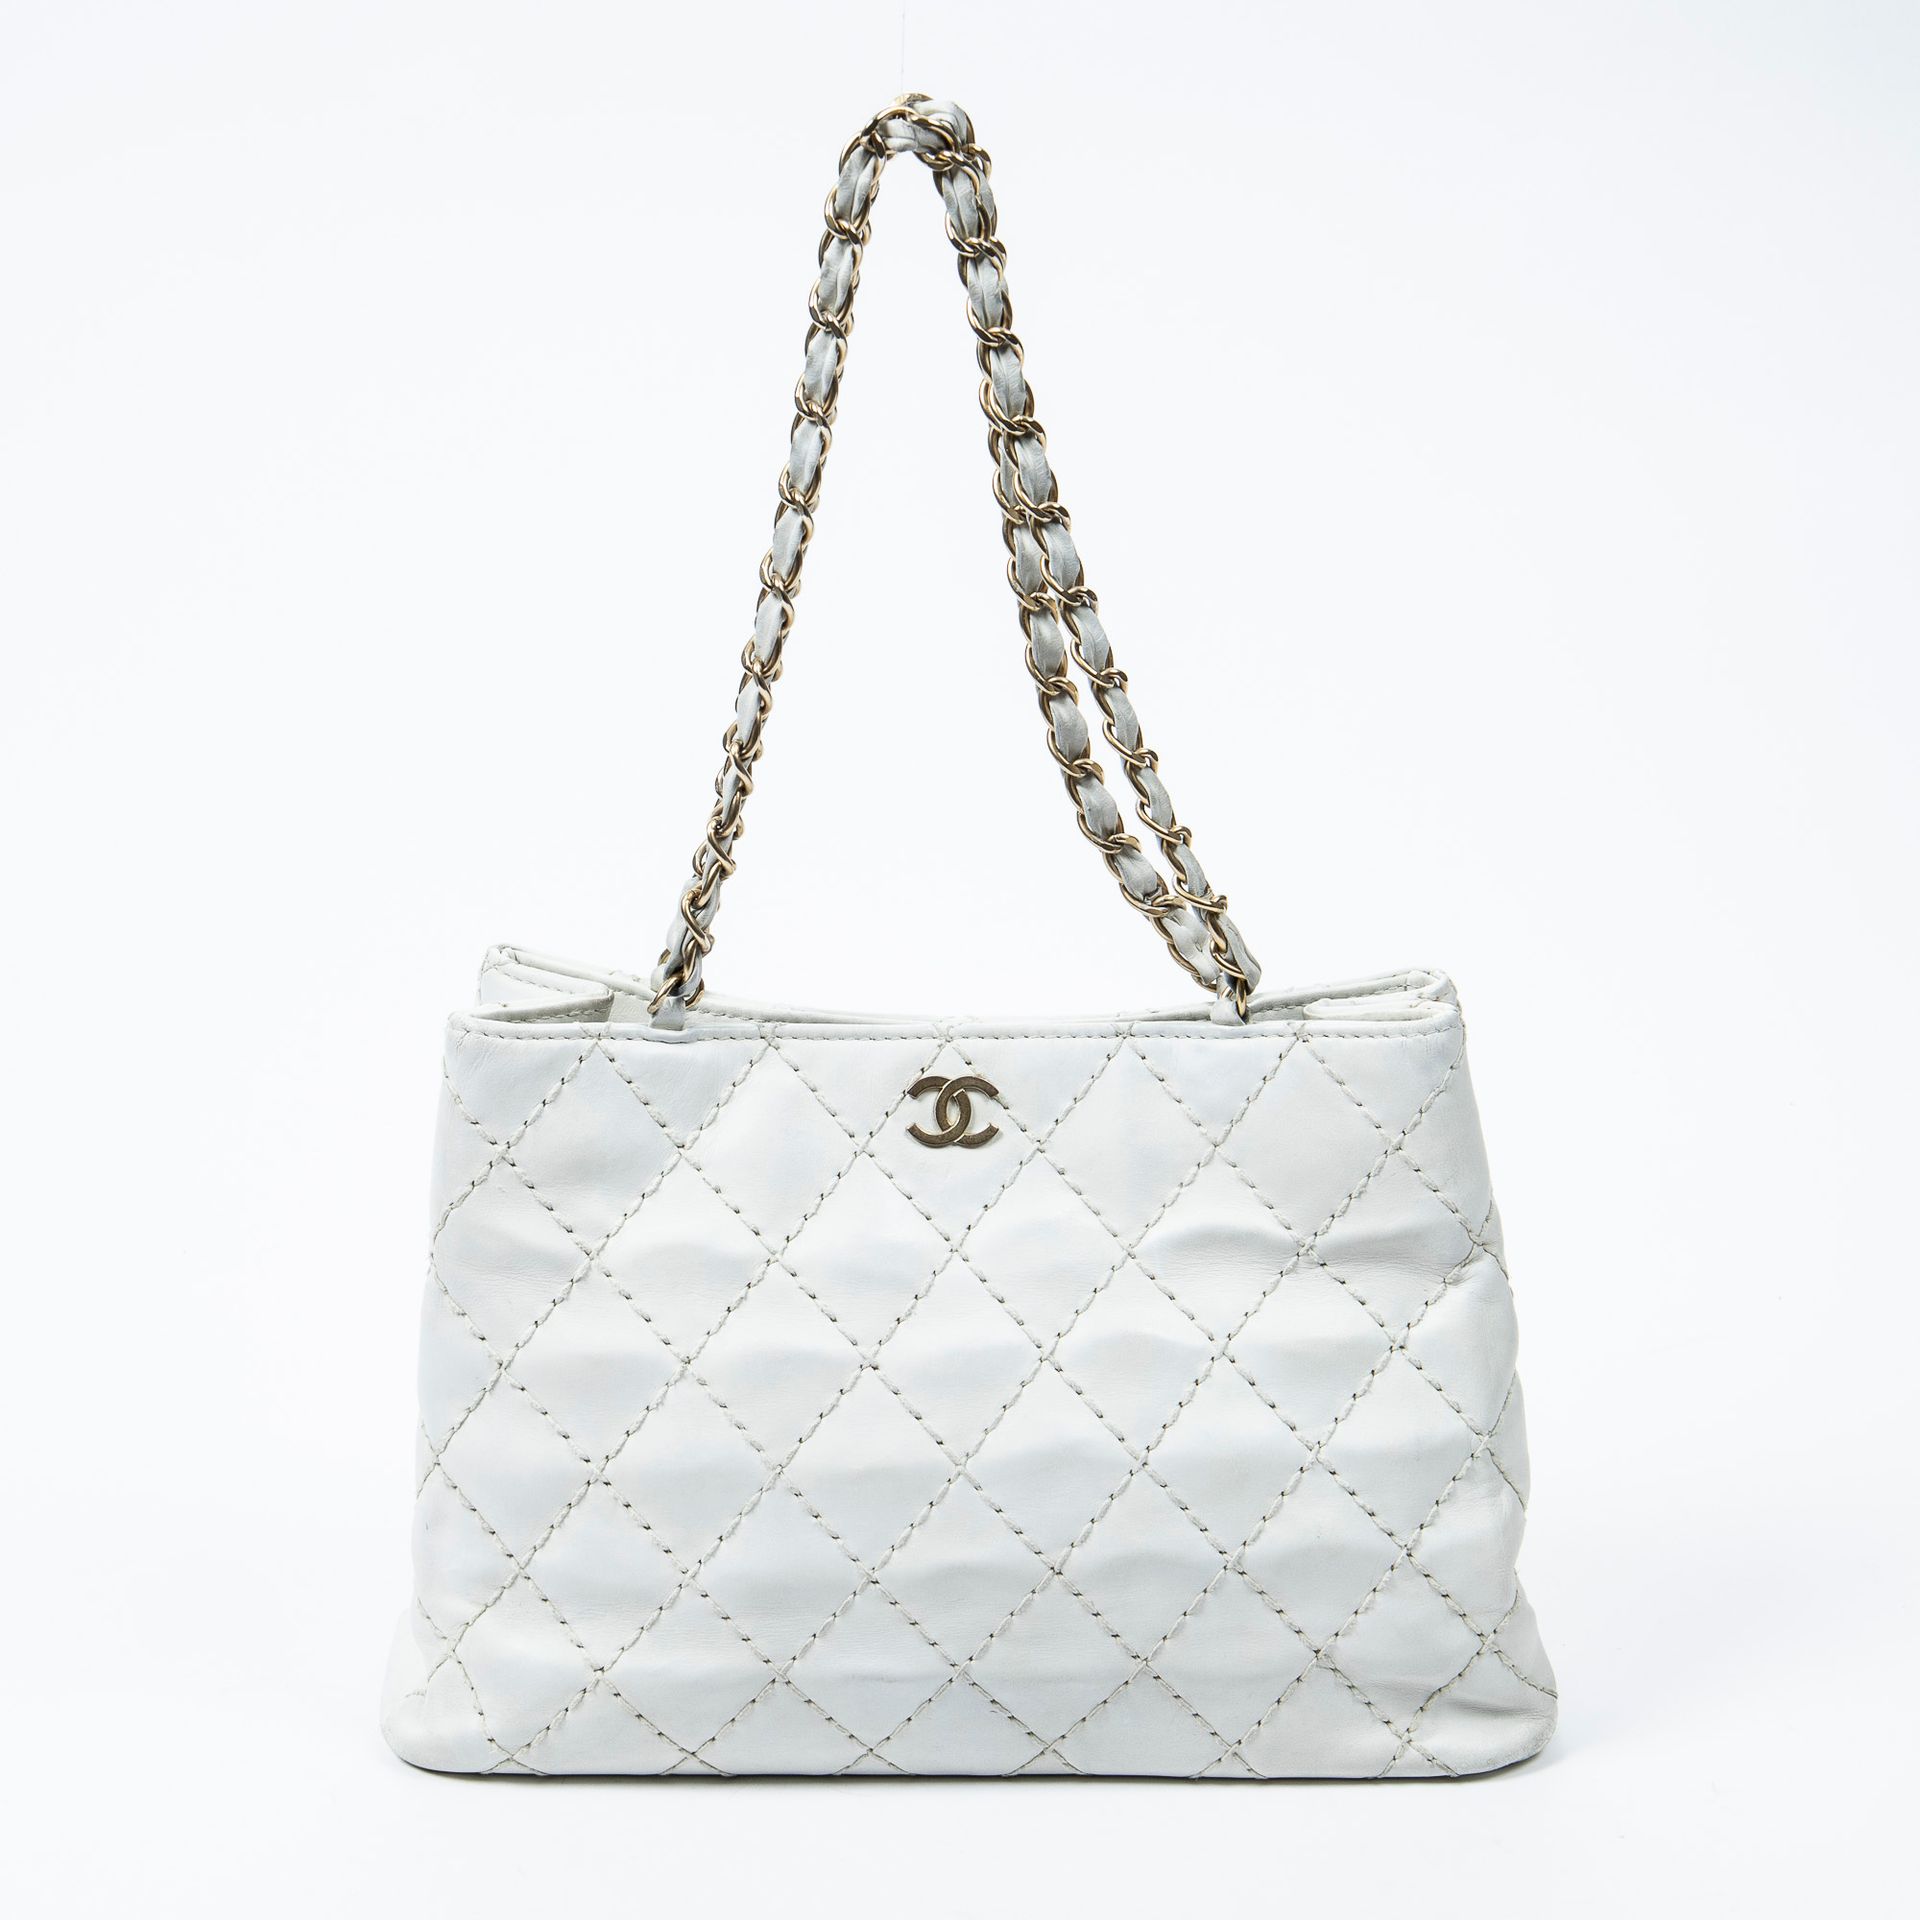 Chanel 香奈儿 - 白色绗缝小羊皮手提包 - 白色面料内衬 - 磁扣开合 - 金色缎面金属装饰 - 尺寸：33x21x9.5厘米 - 二手状态